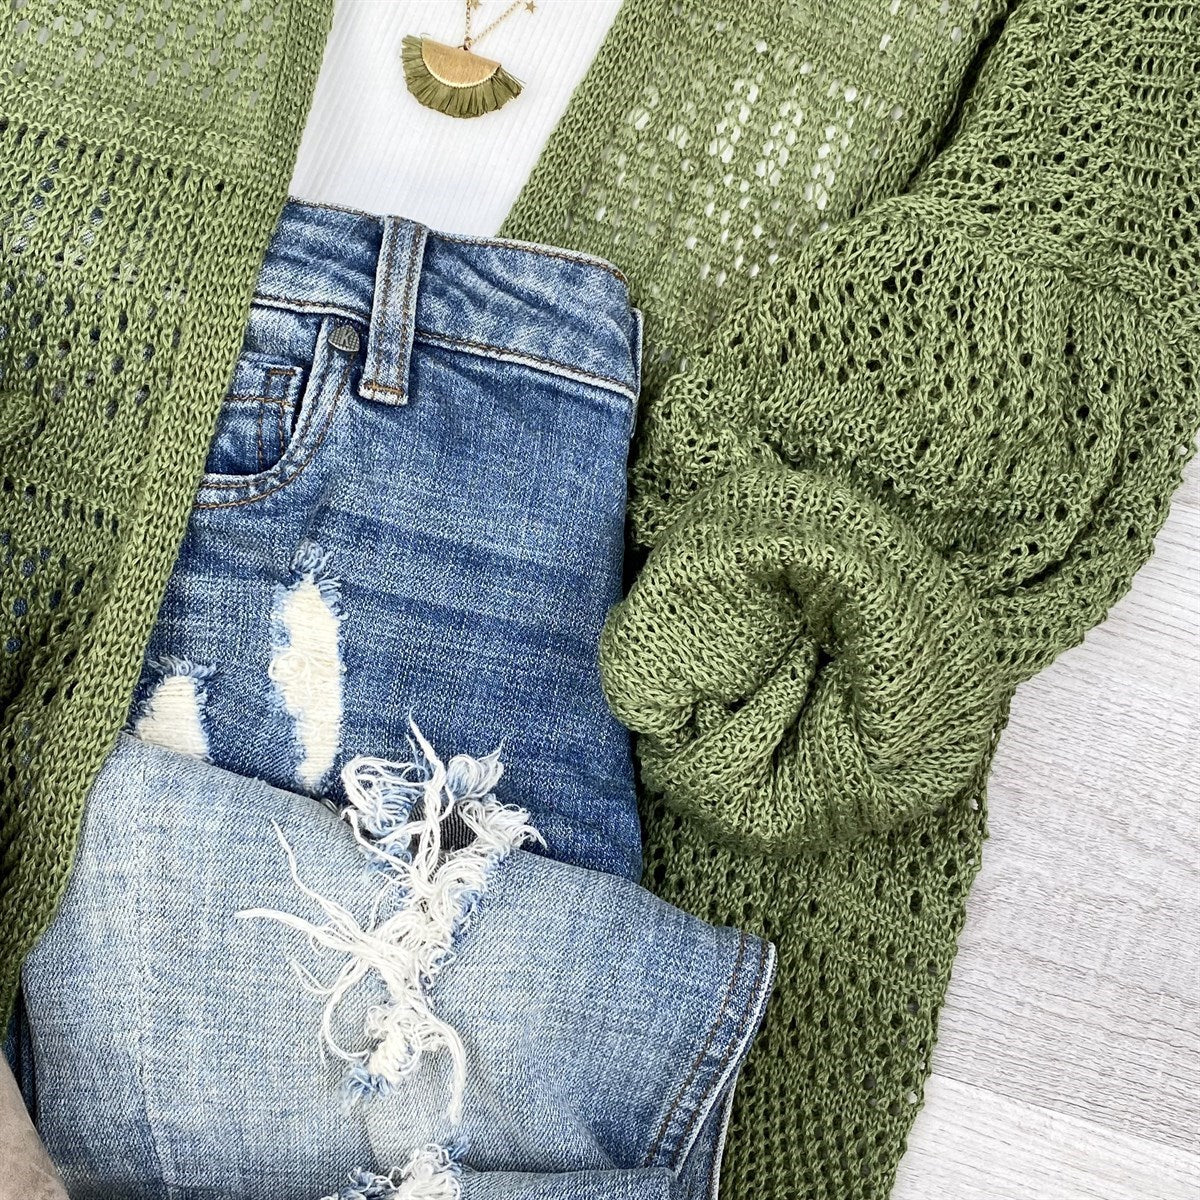 Crochet Netted Cardigan